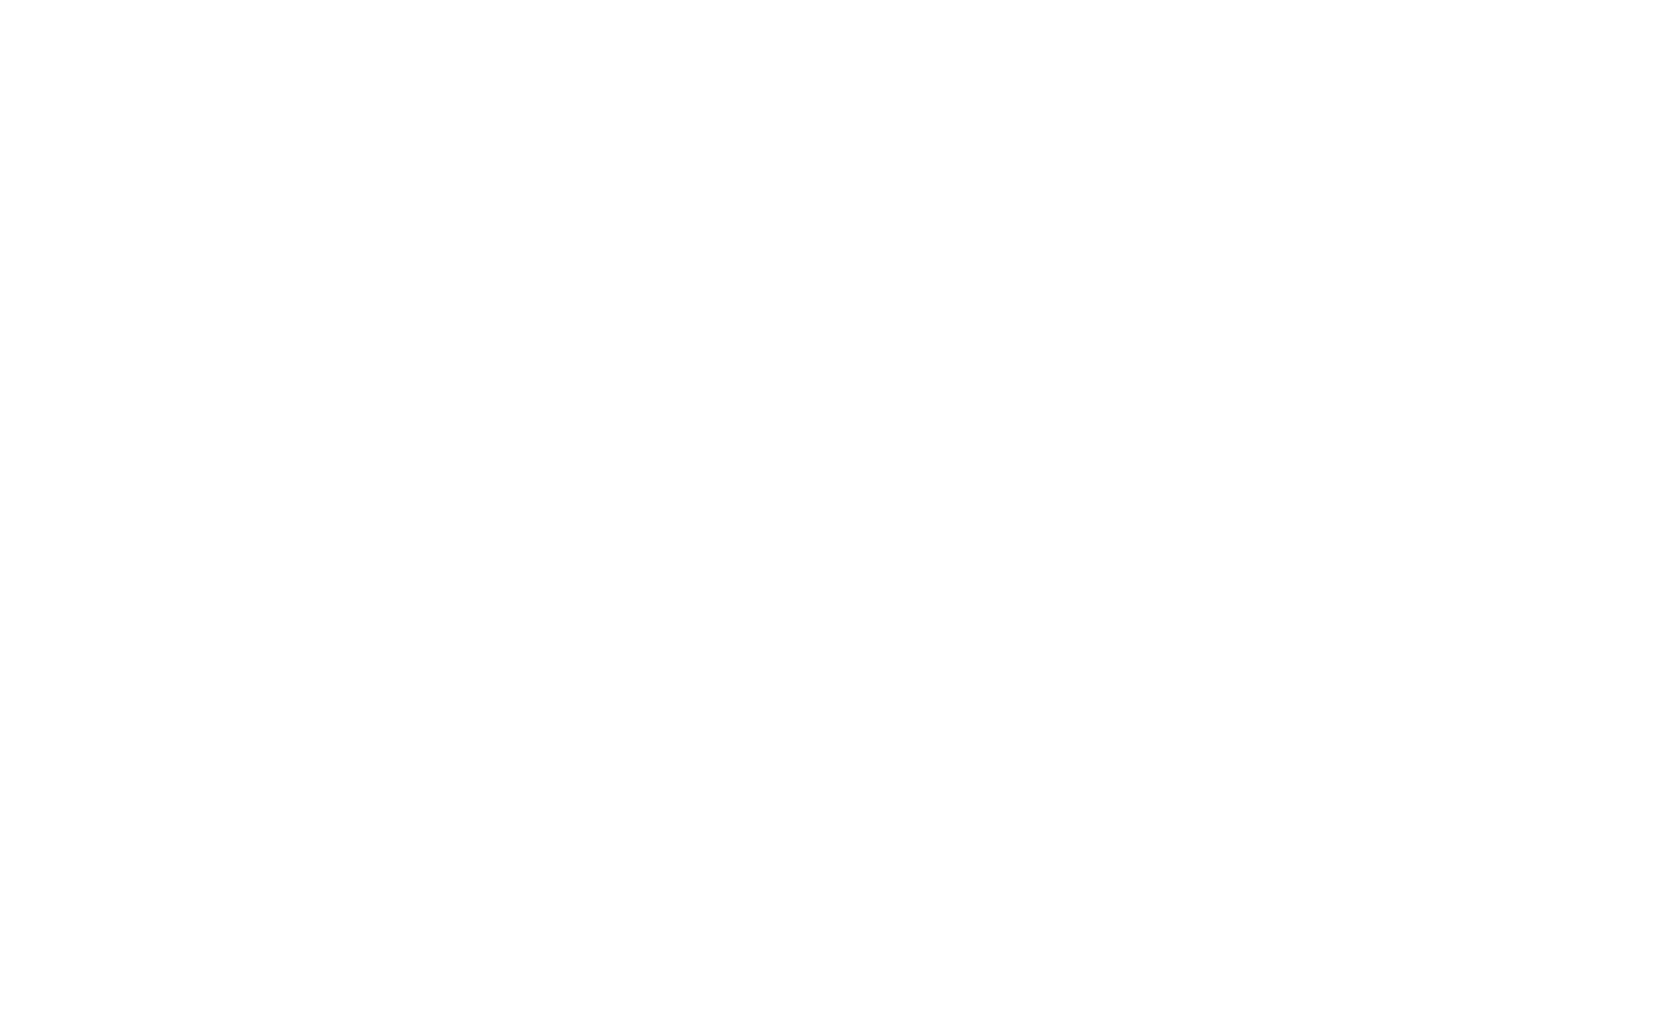 Smart Host